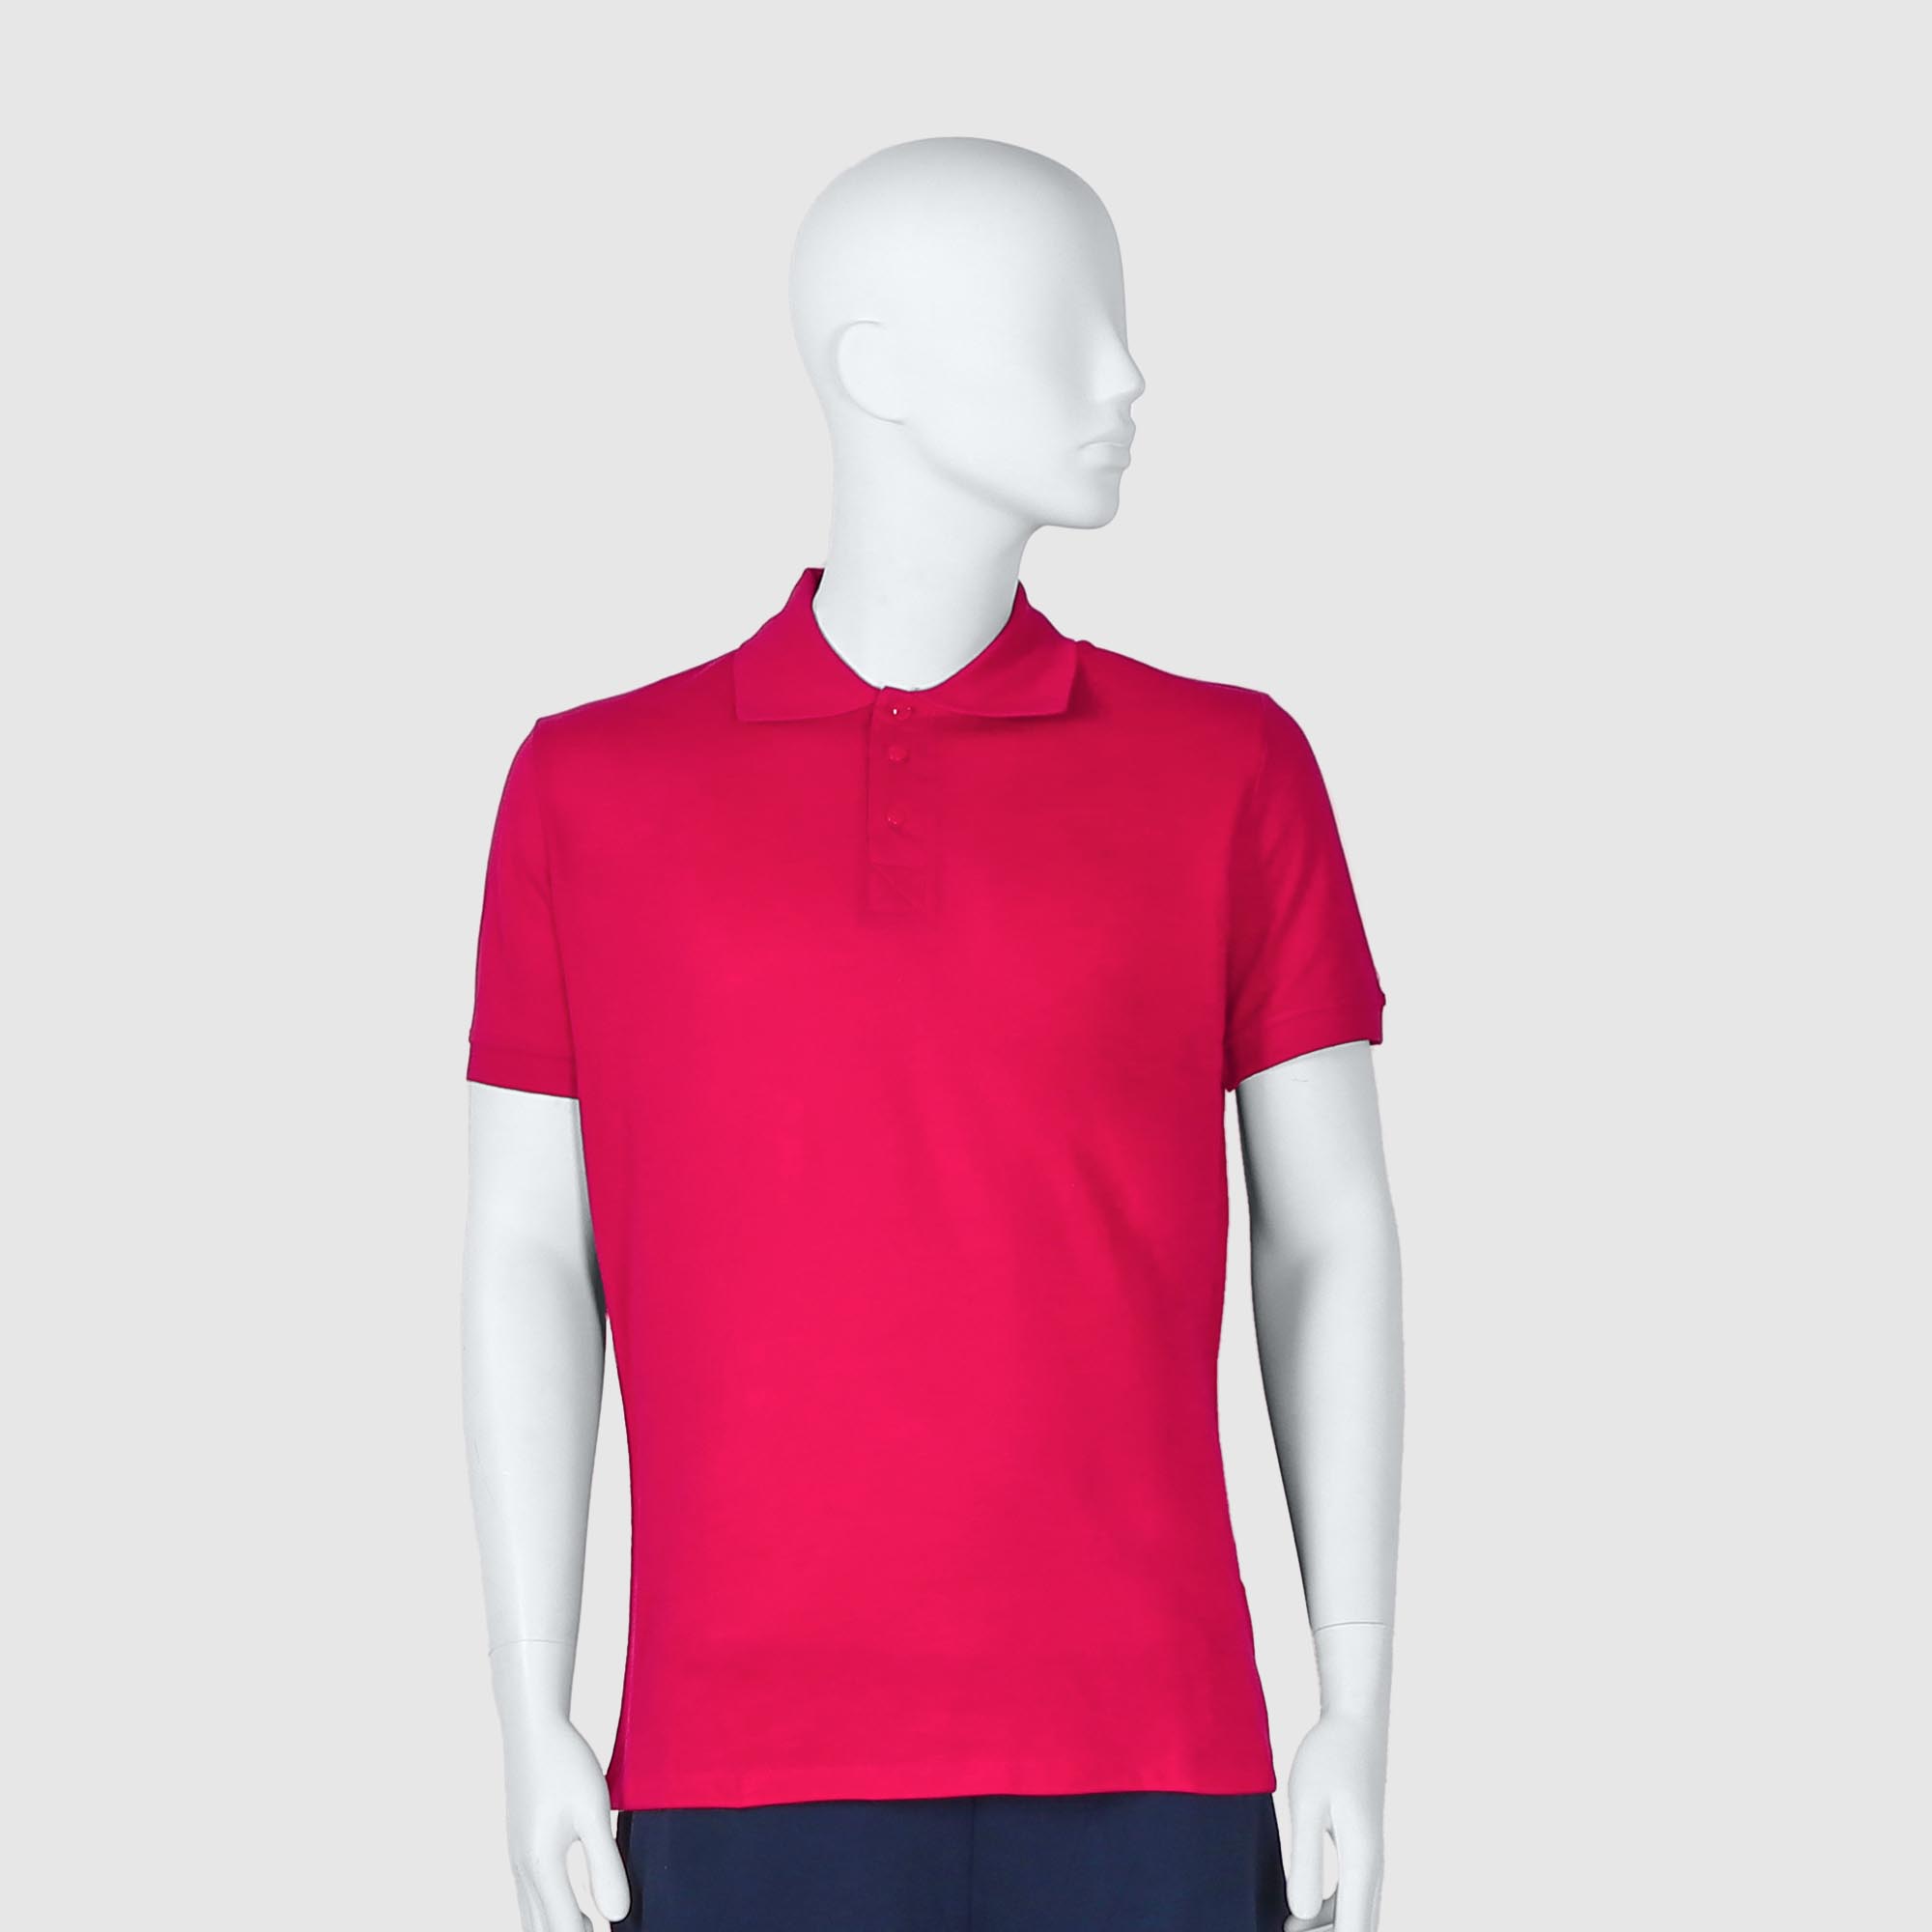 Мужская футболка-поло Diva Teks красная (DTD-08), цвет красный, размер 44-46